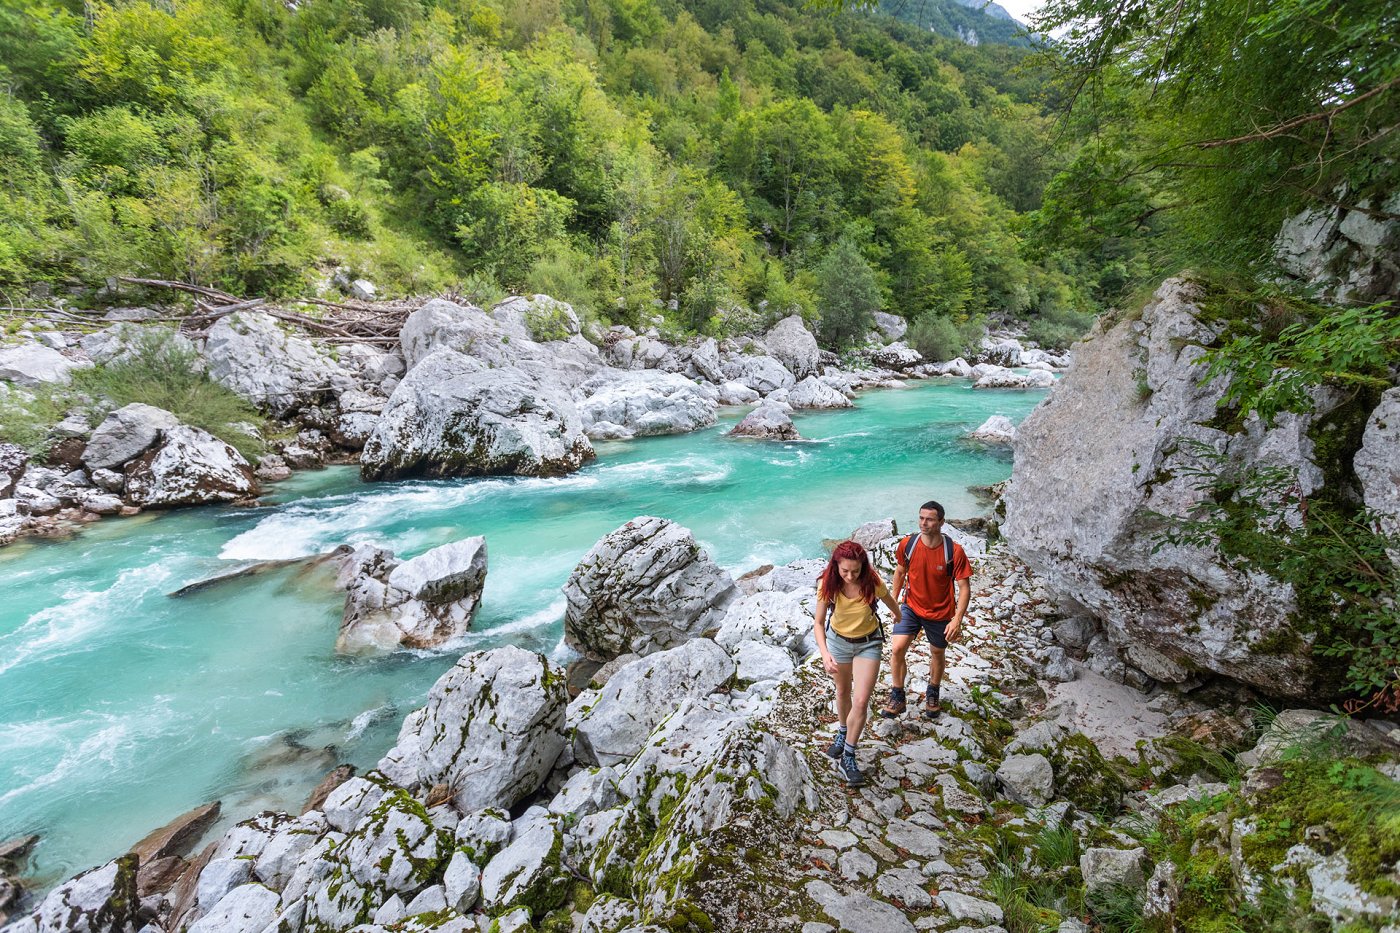 Hikers walk along the Juliana Trail along the emerald Soča River